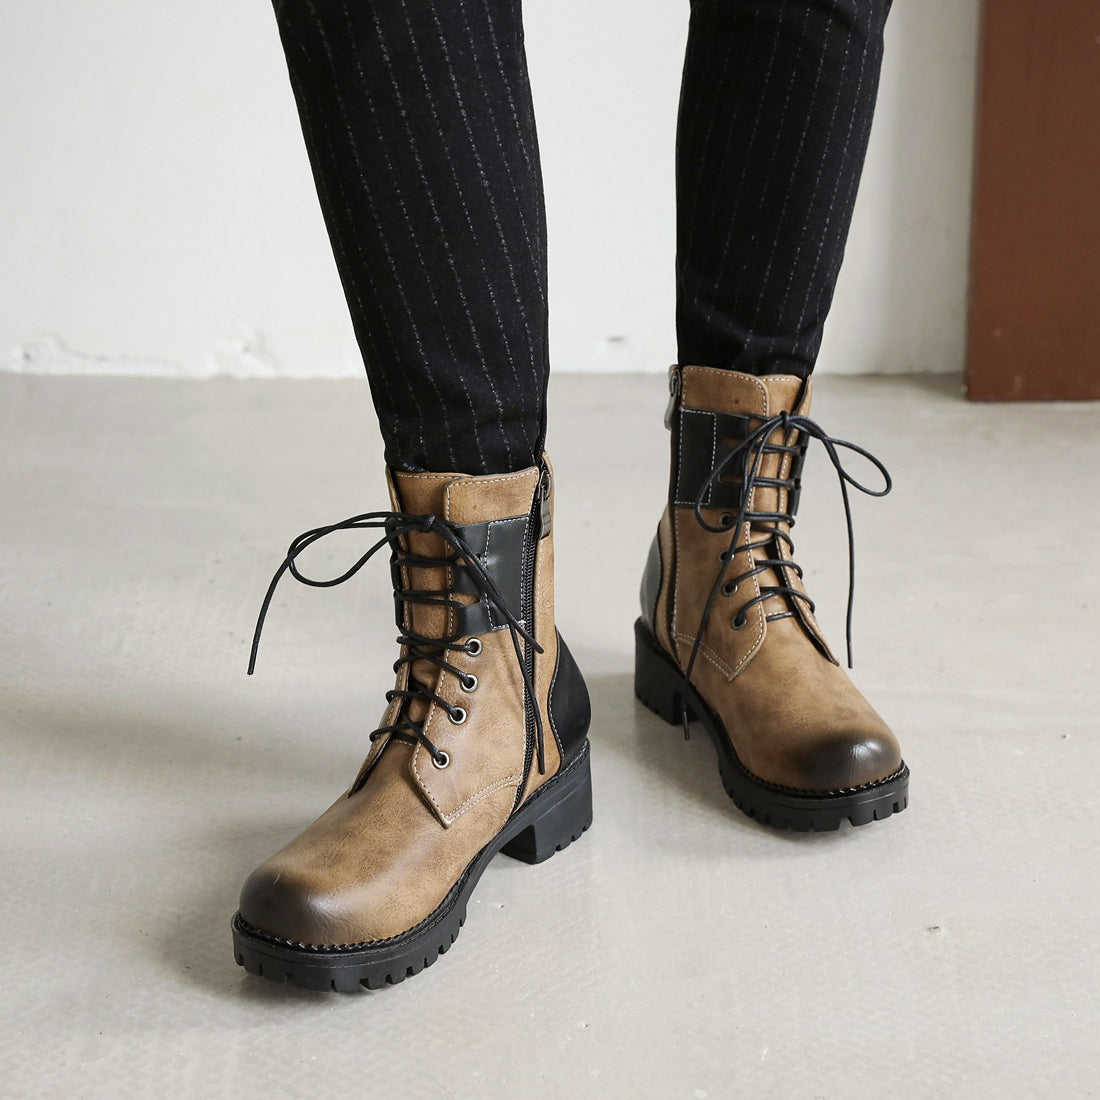 Bigsizeheels Colorblock retro fashion Martin boots - Brown freeshipping - bigsizeheel®-size5-size15 -All Plus Sizes Available!